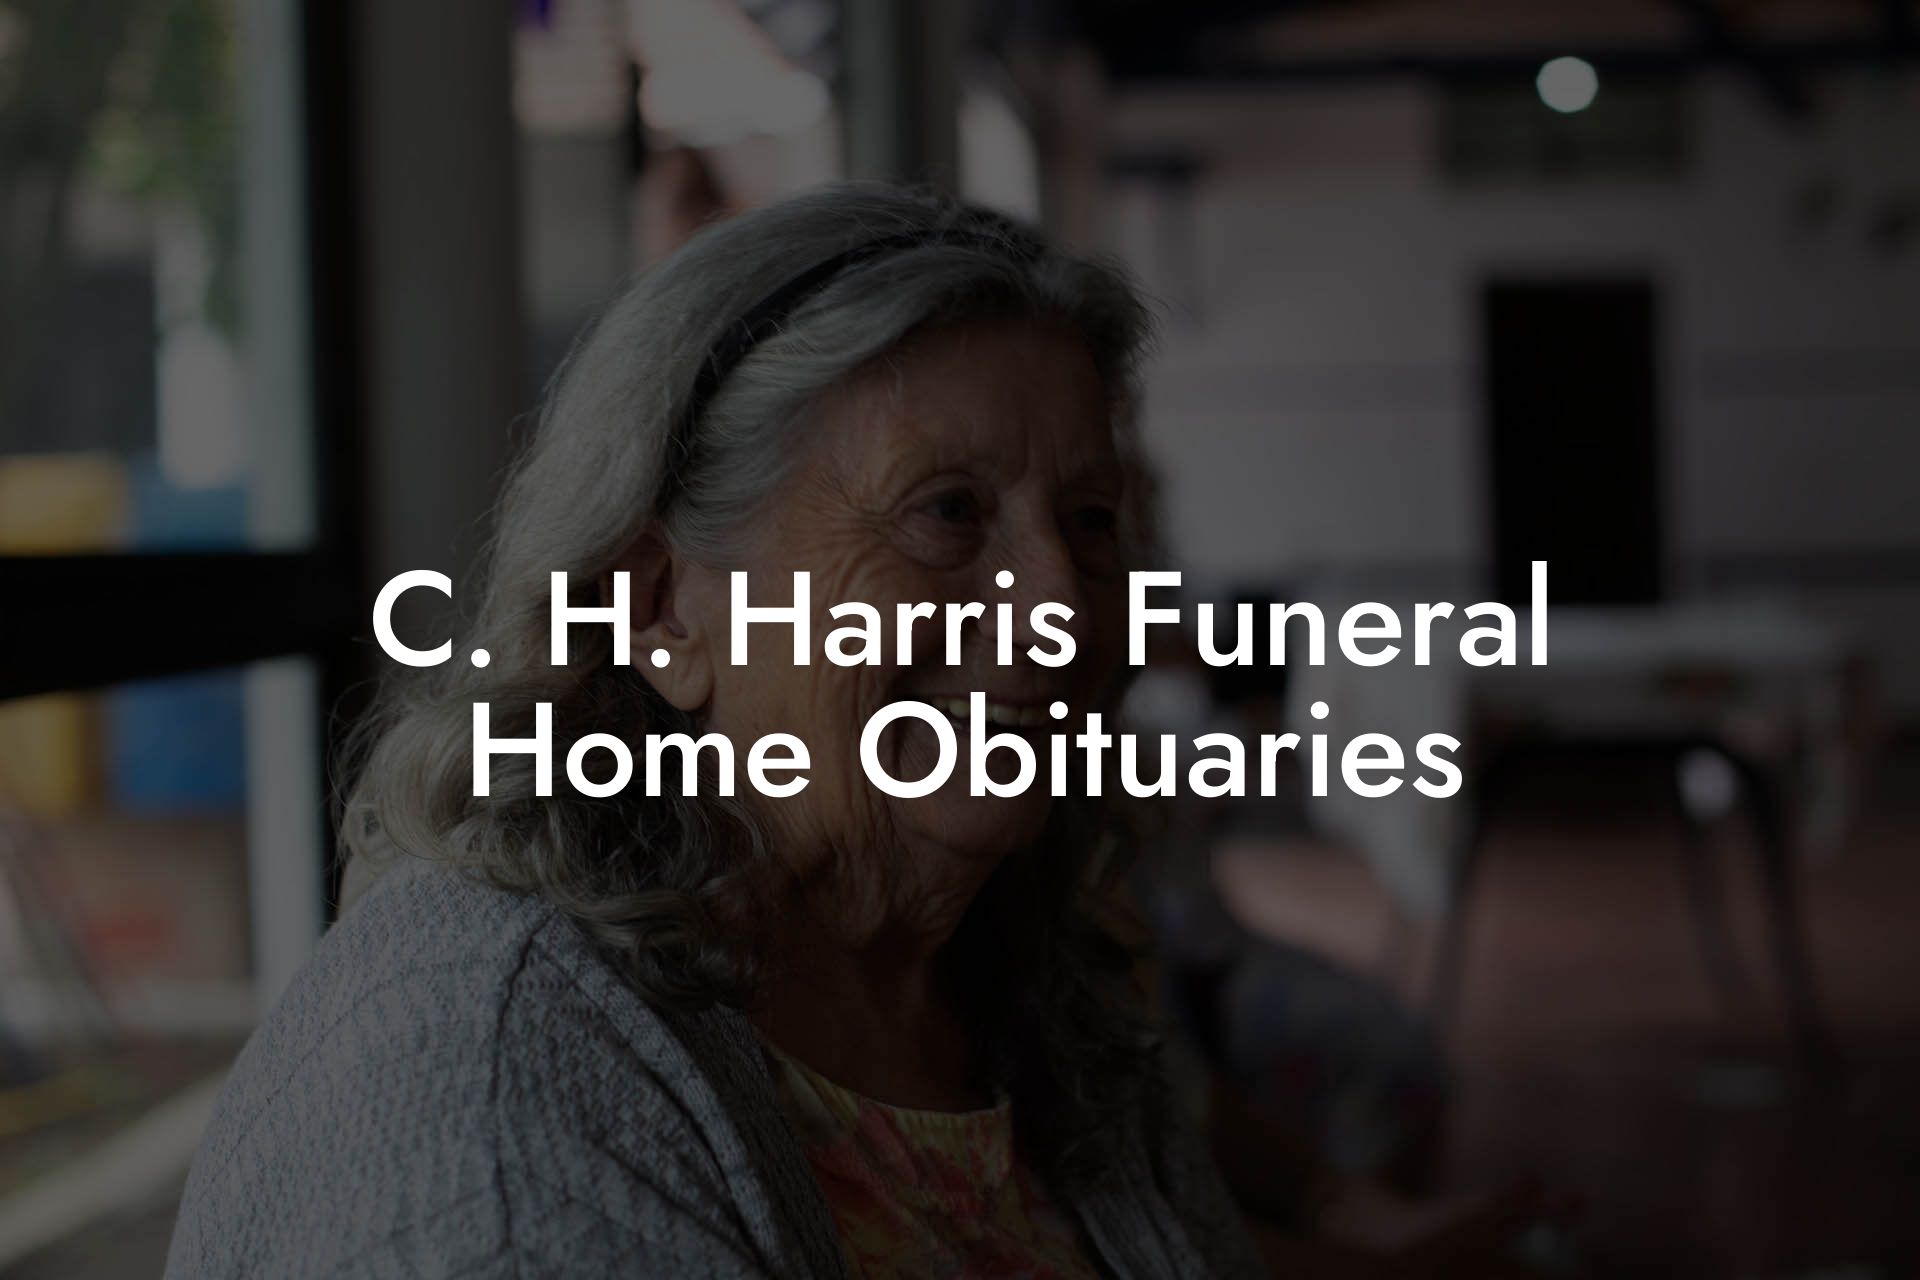 C. H. Harris Funeral Home Obituaries